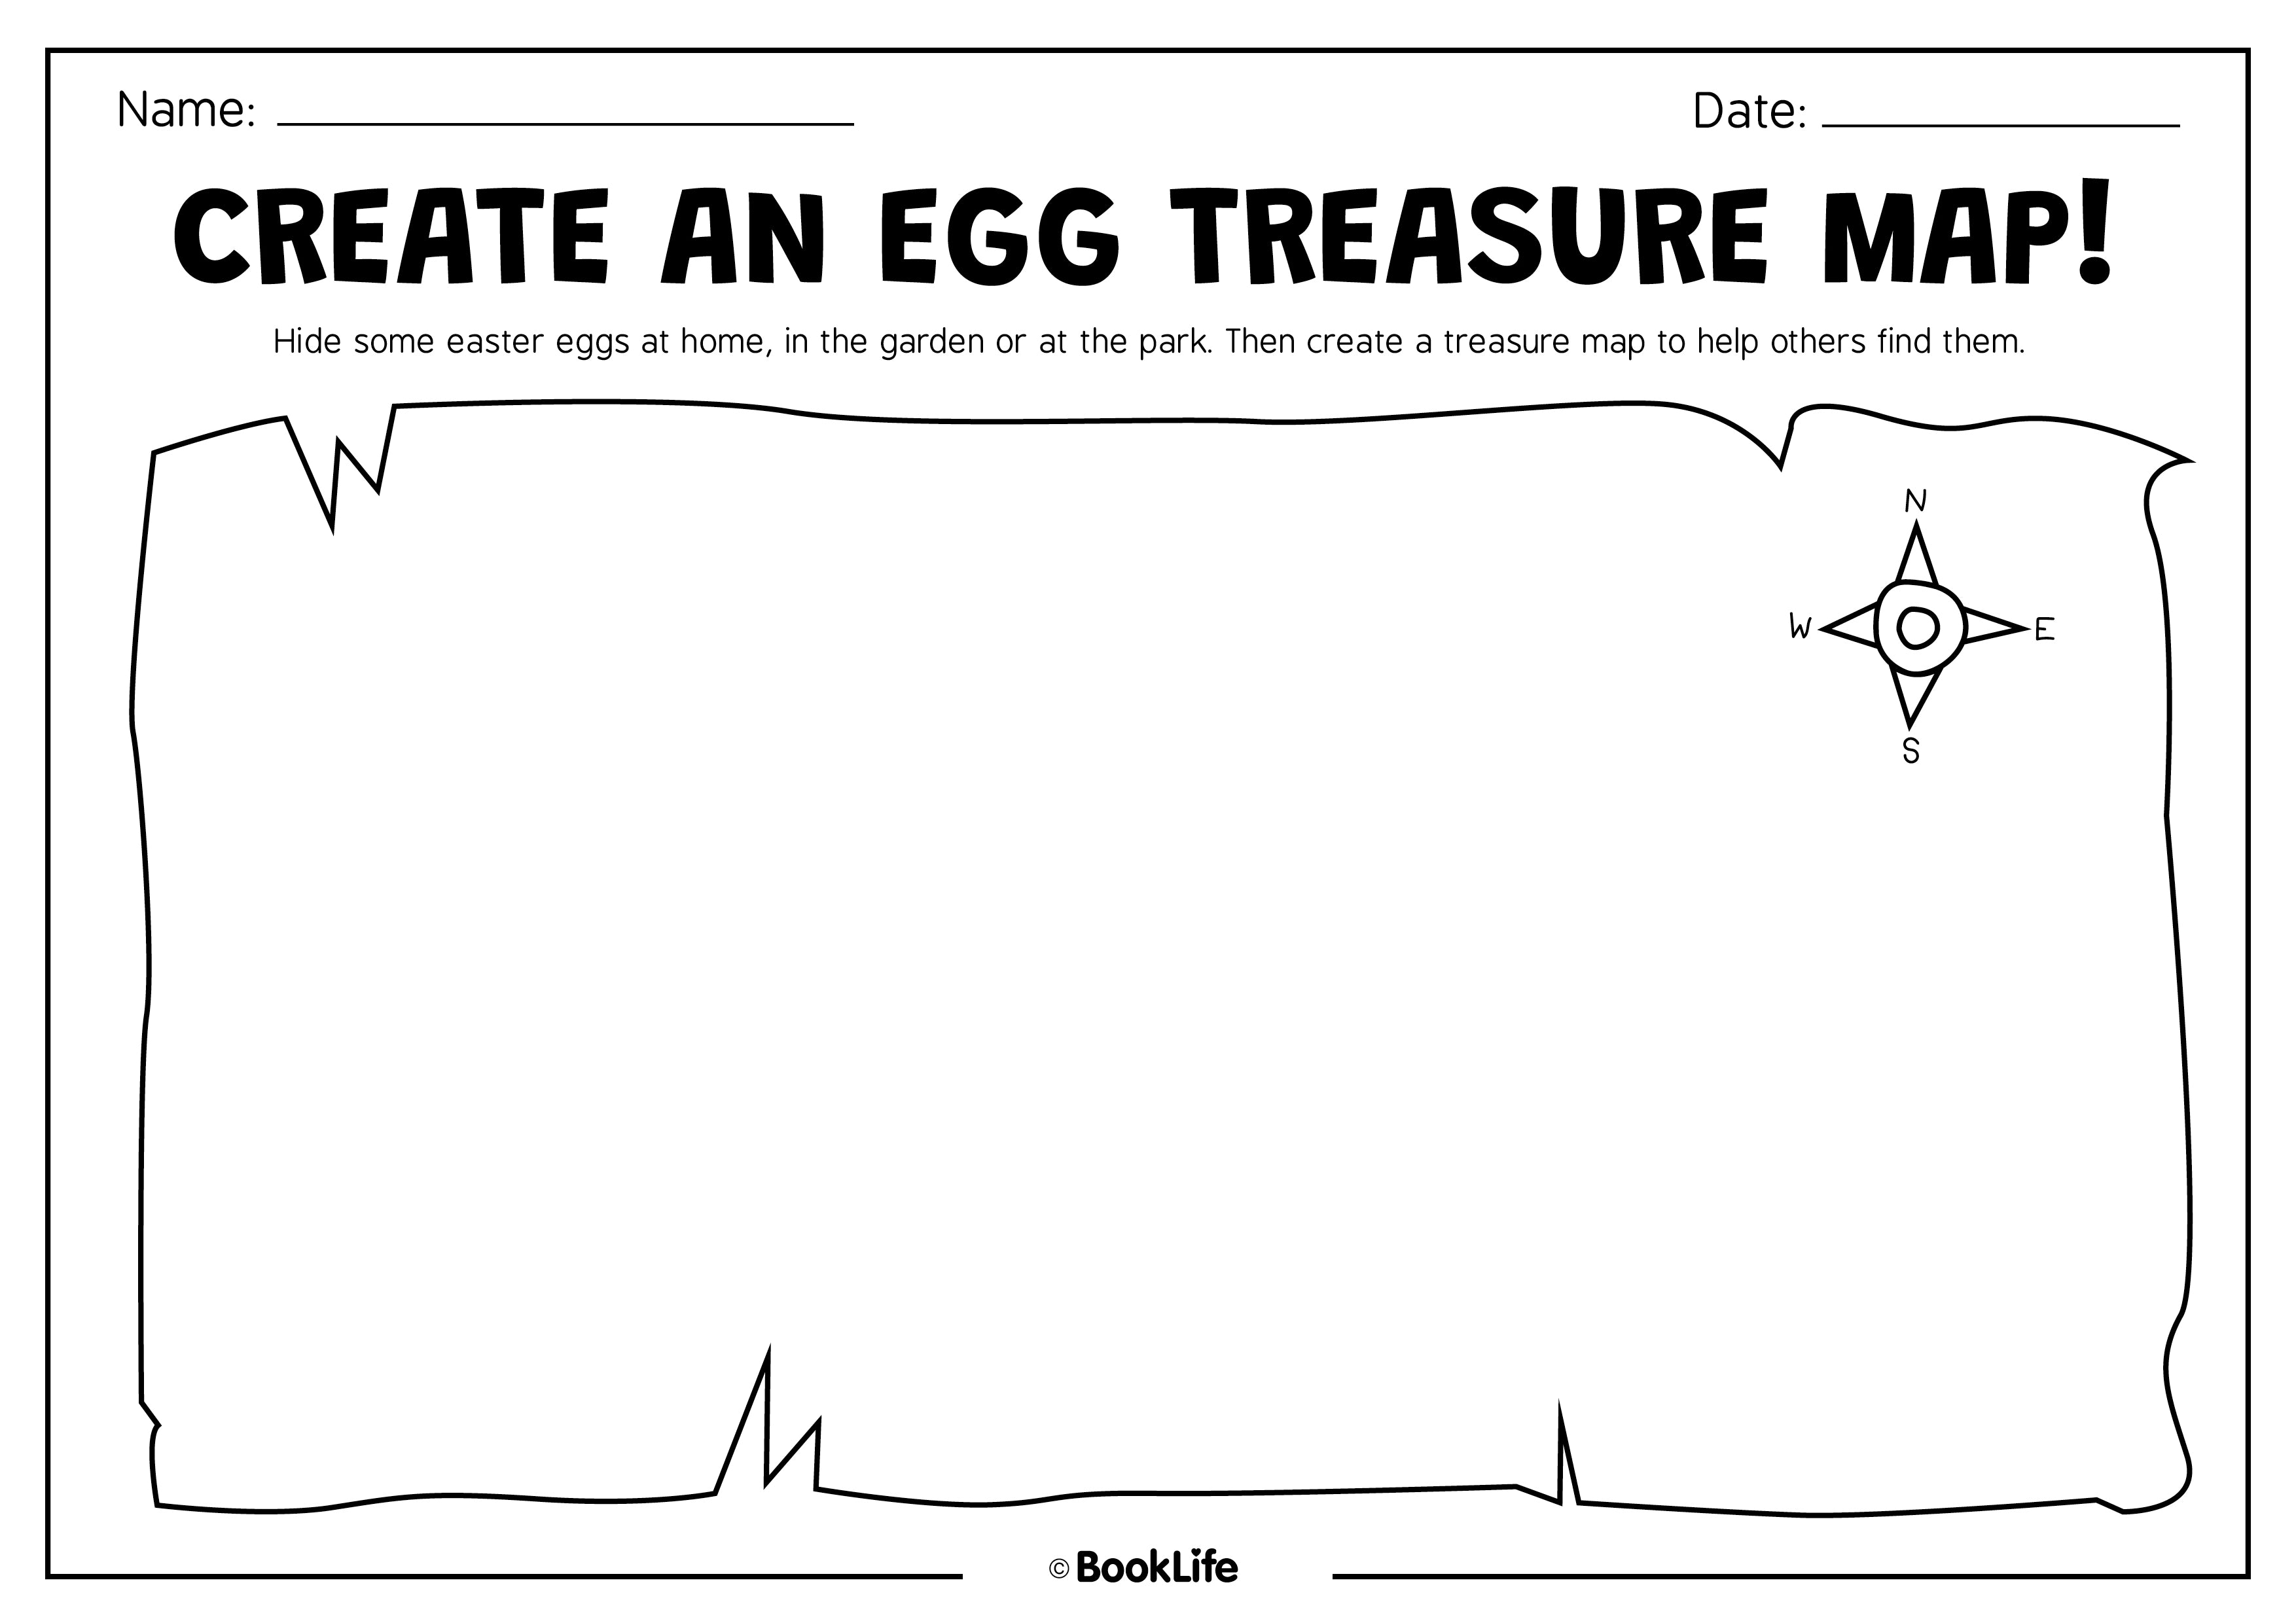 Create An Egg Treasure Map!